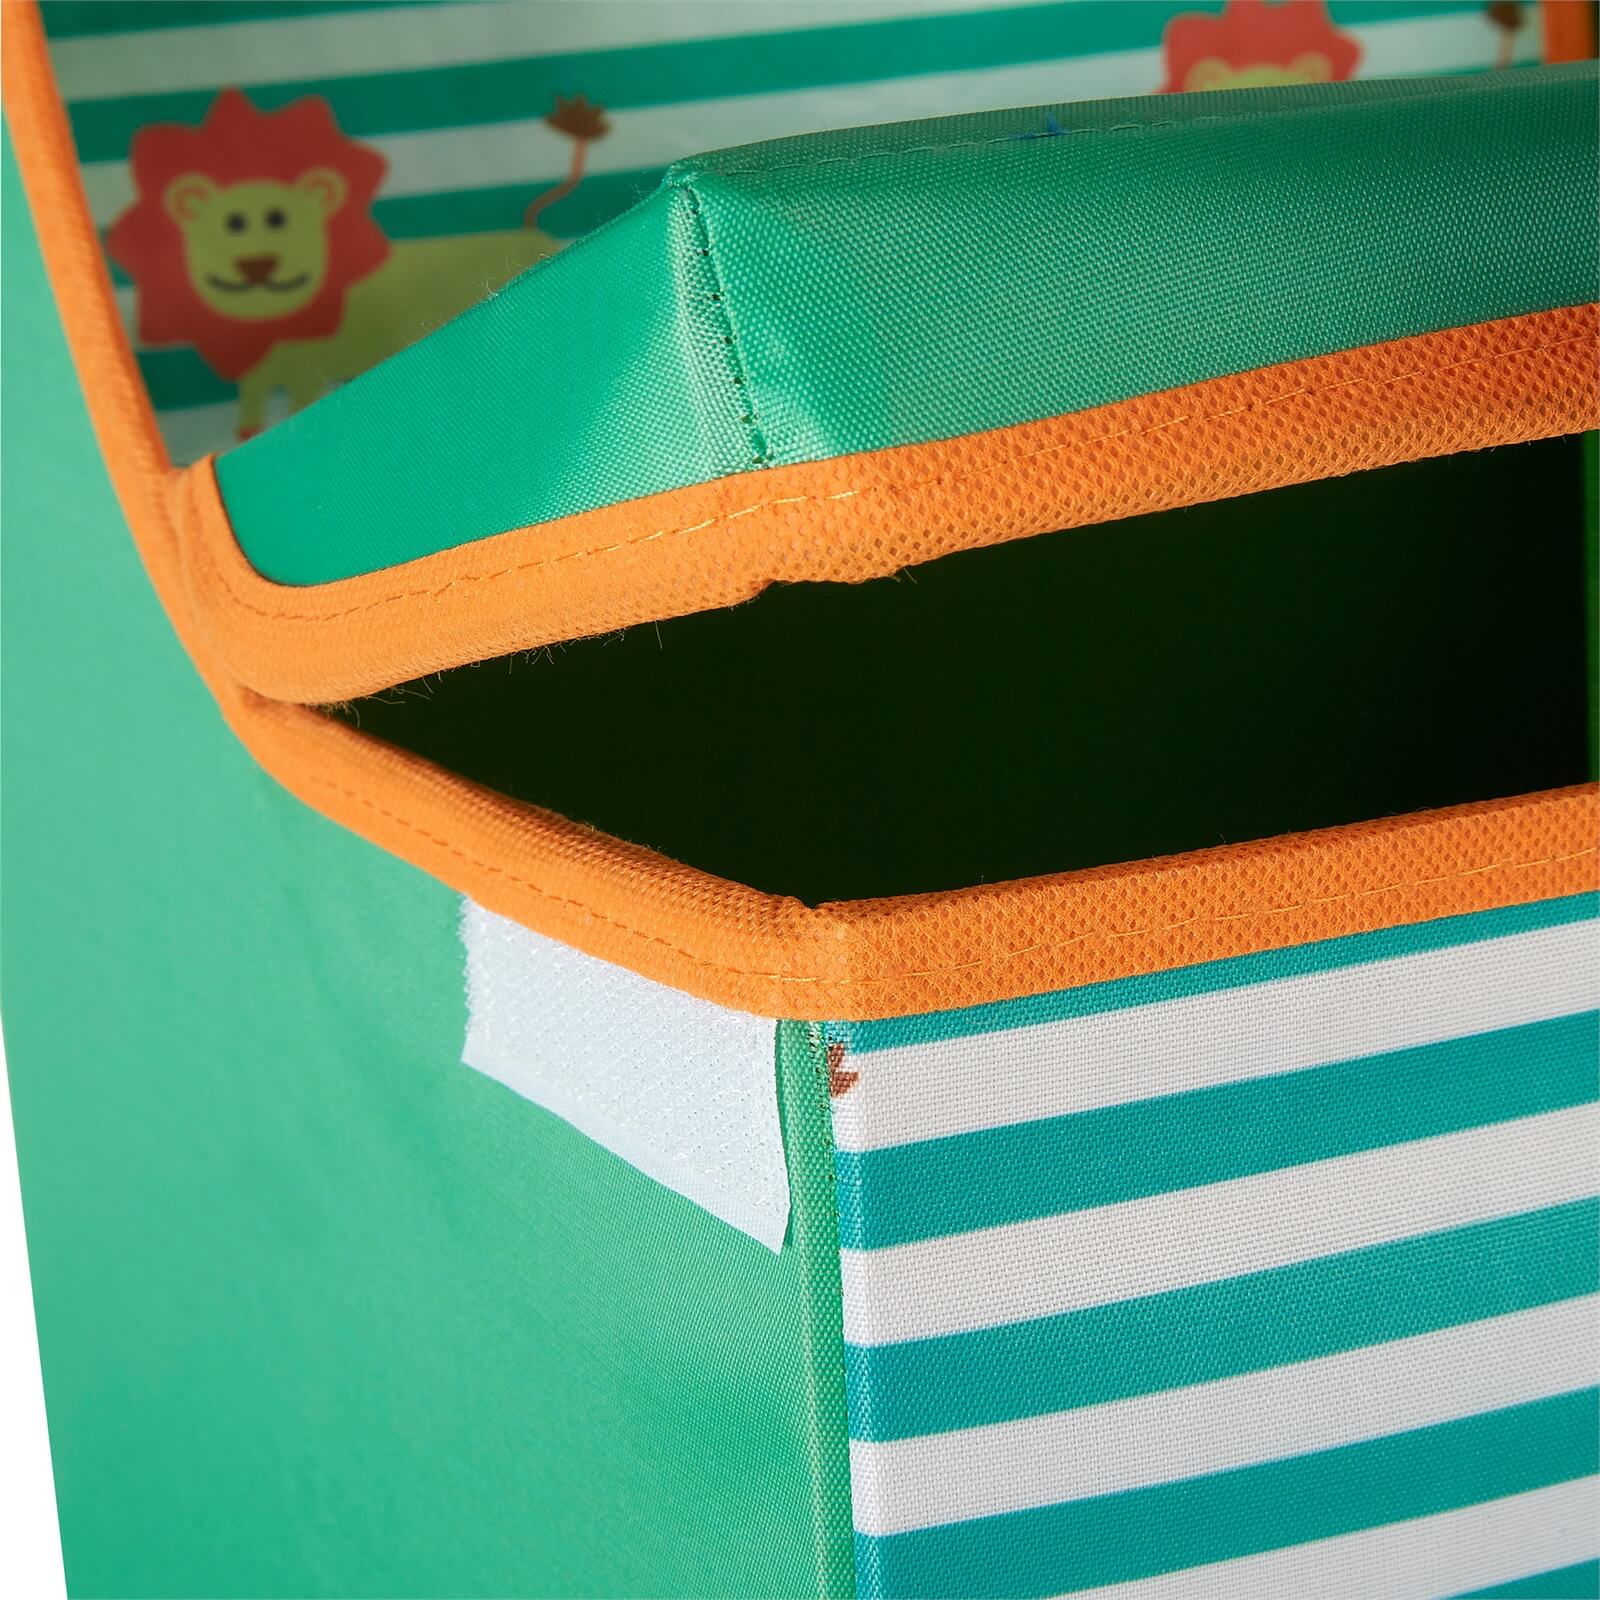 Kids Storage Box Seat Lion Design